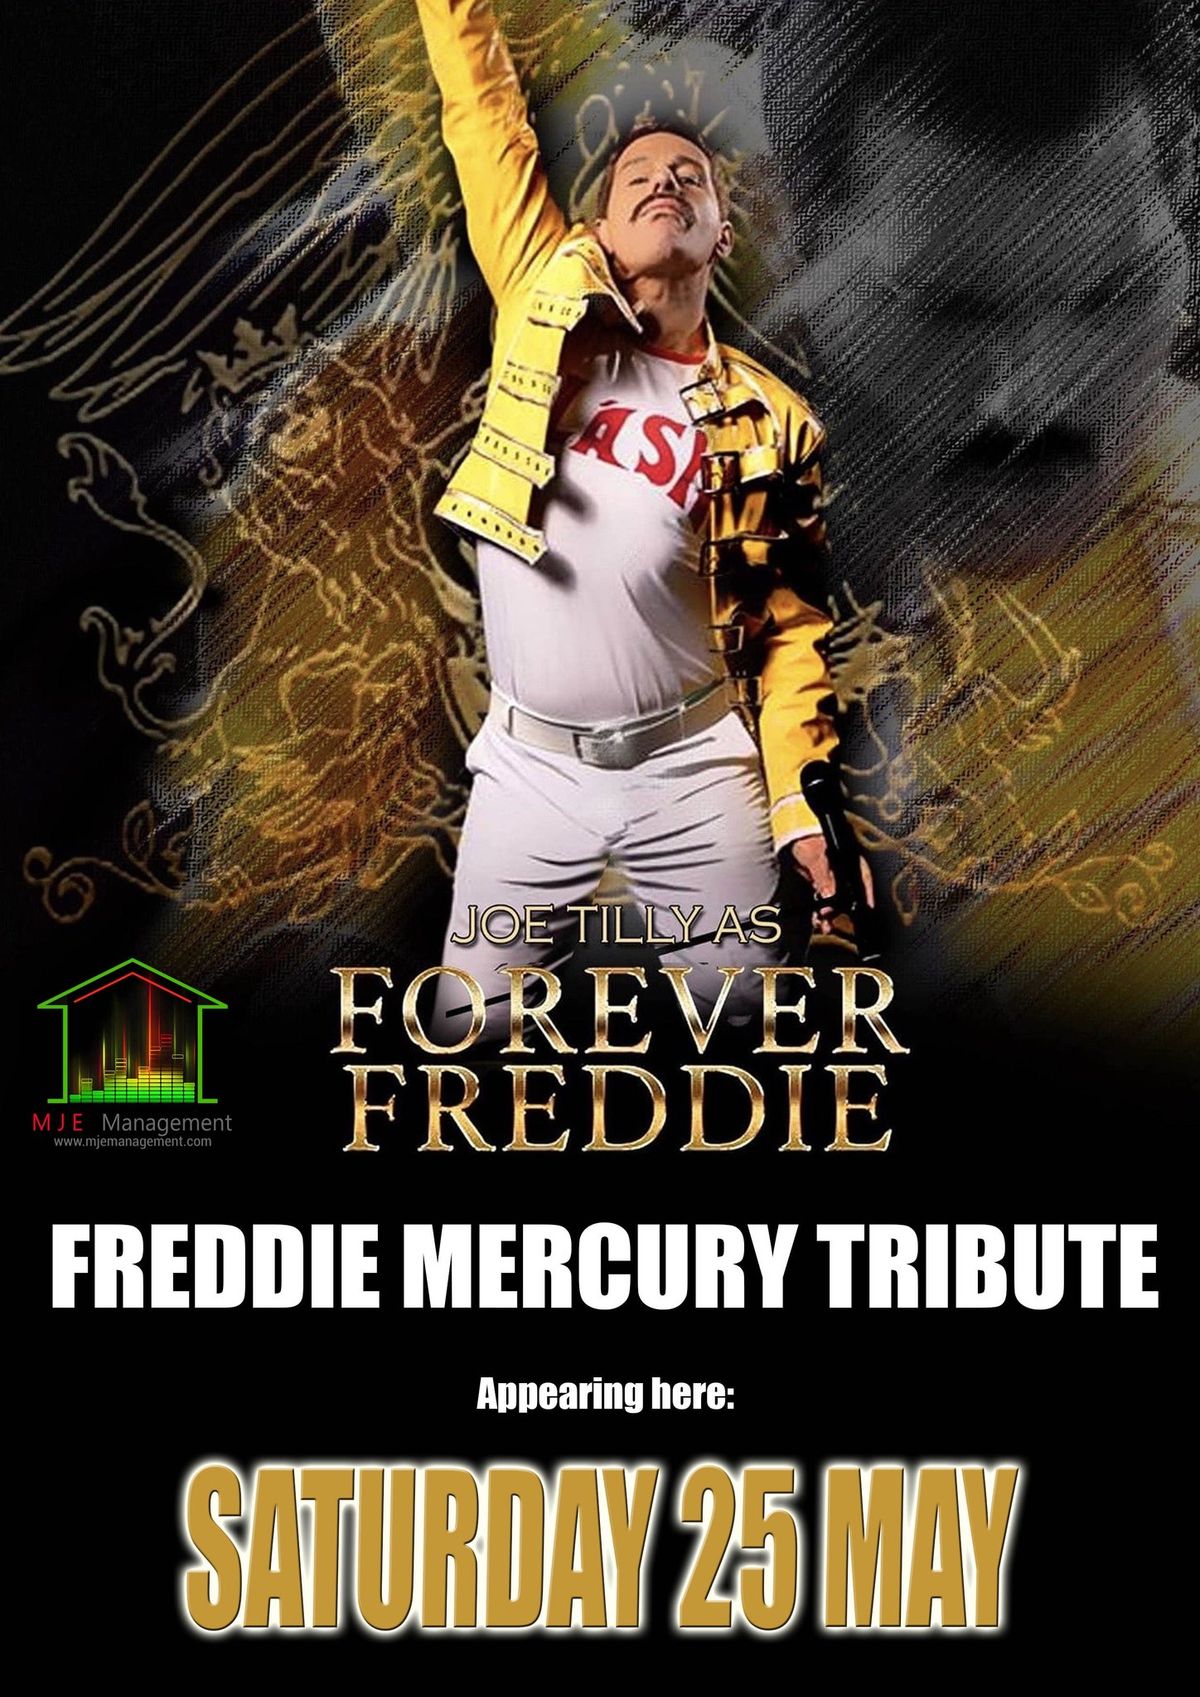 Freddie Mercury tribute night